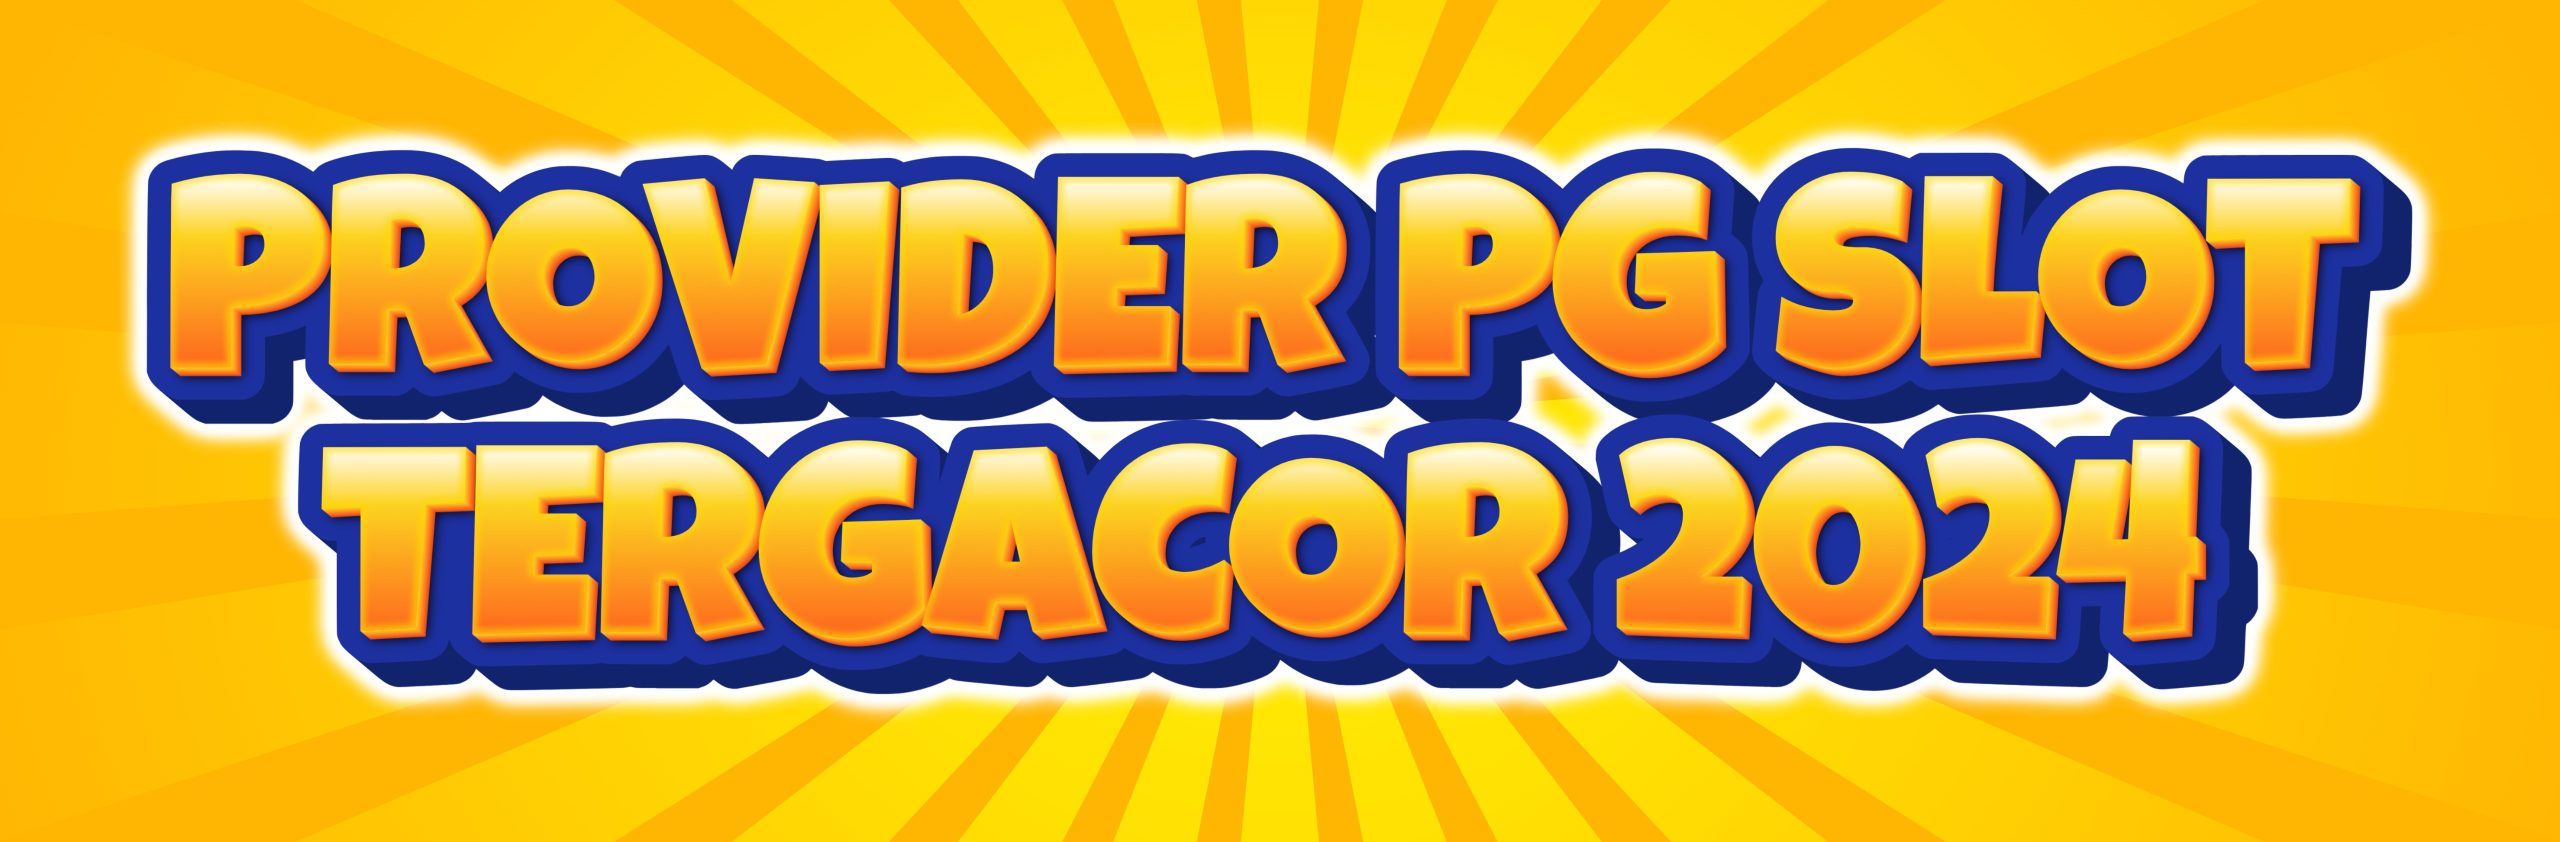 PG Soft Provider Gacor